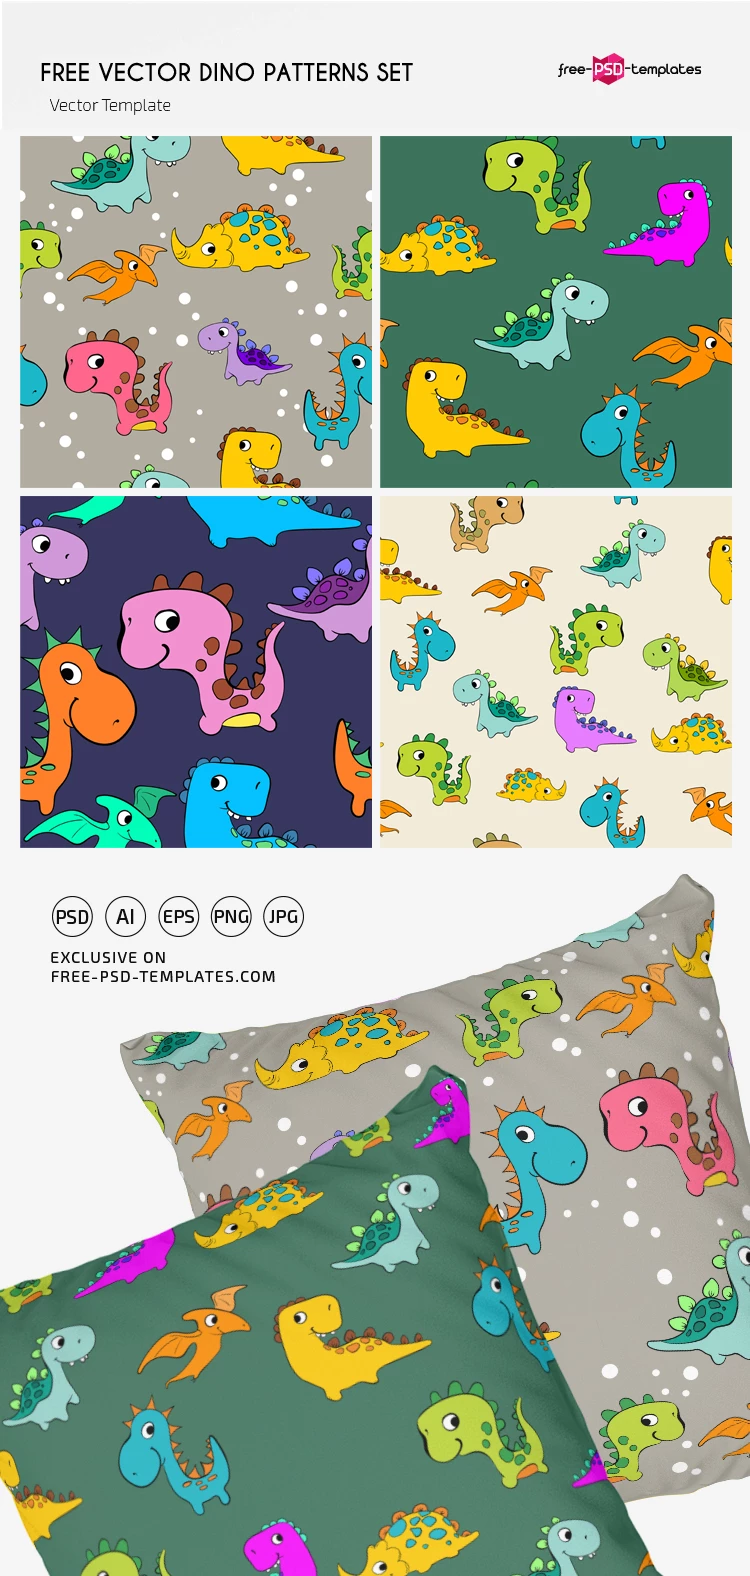 Free Vector Dino Patterns Set